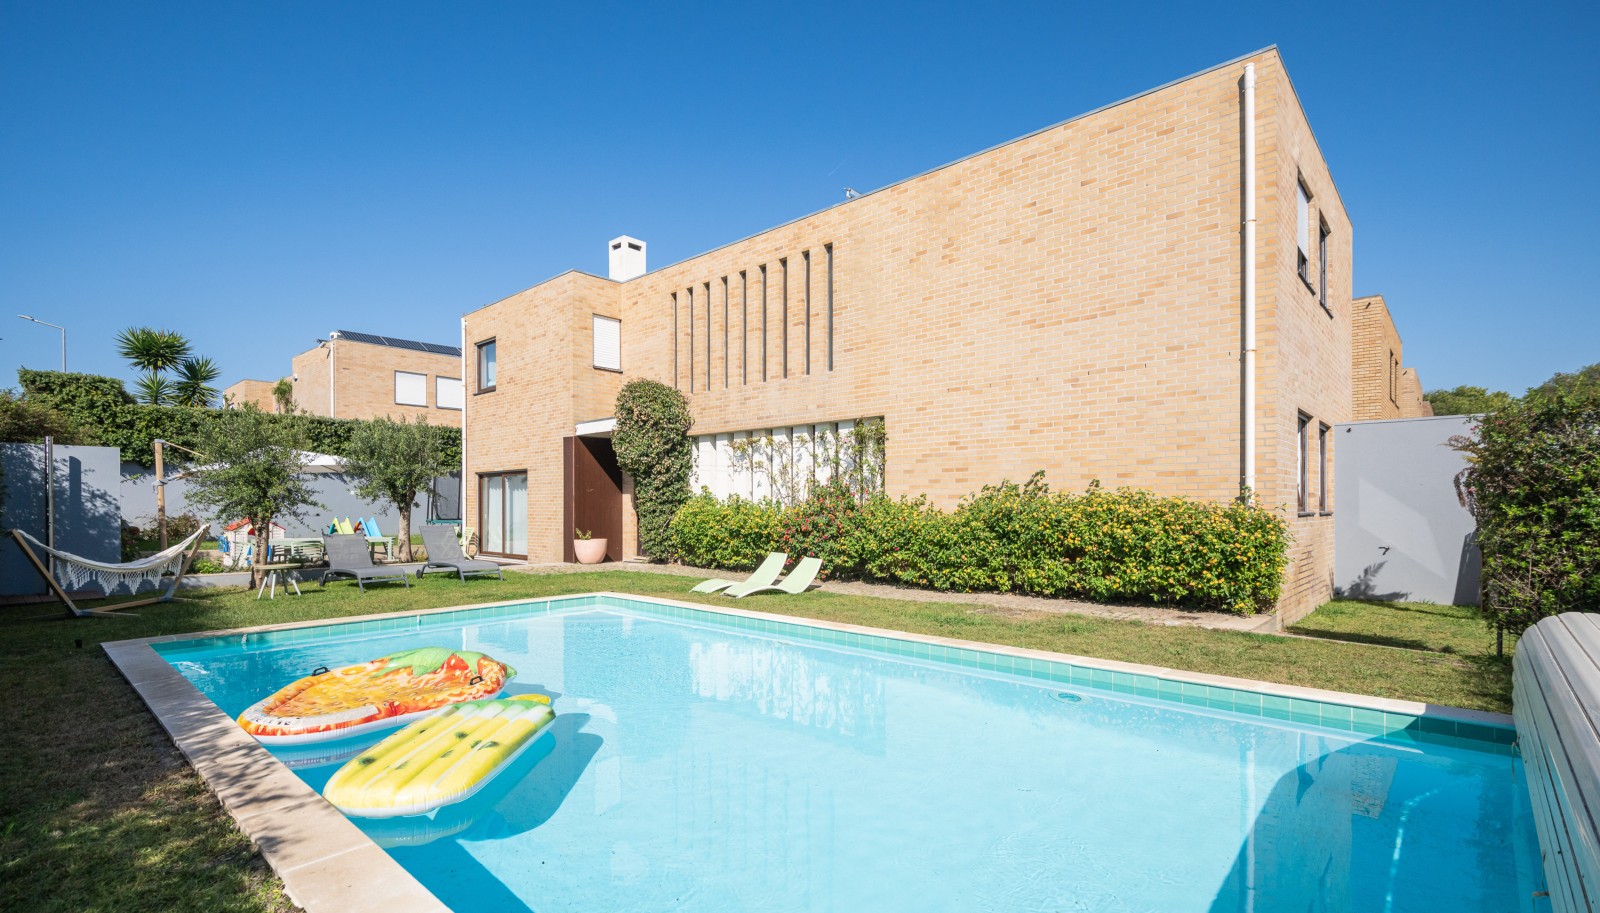 4 bedroom villa with swimming pool, for sale, in Porto, Portugal_241029